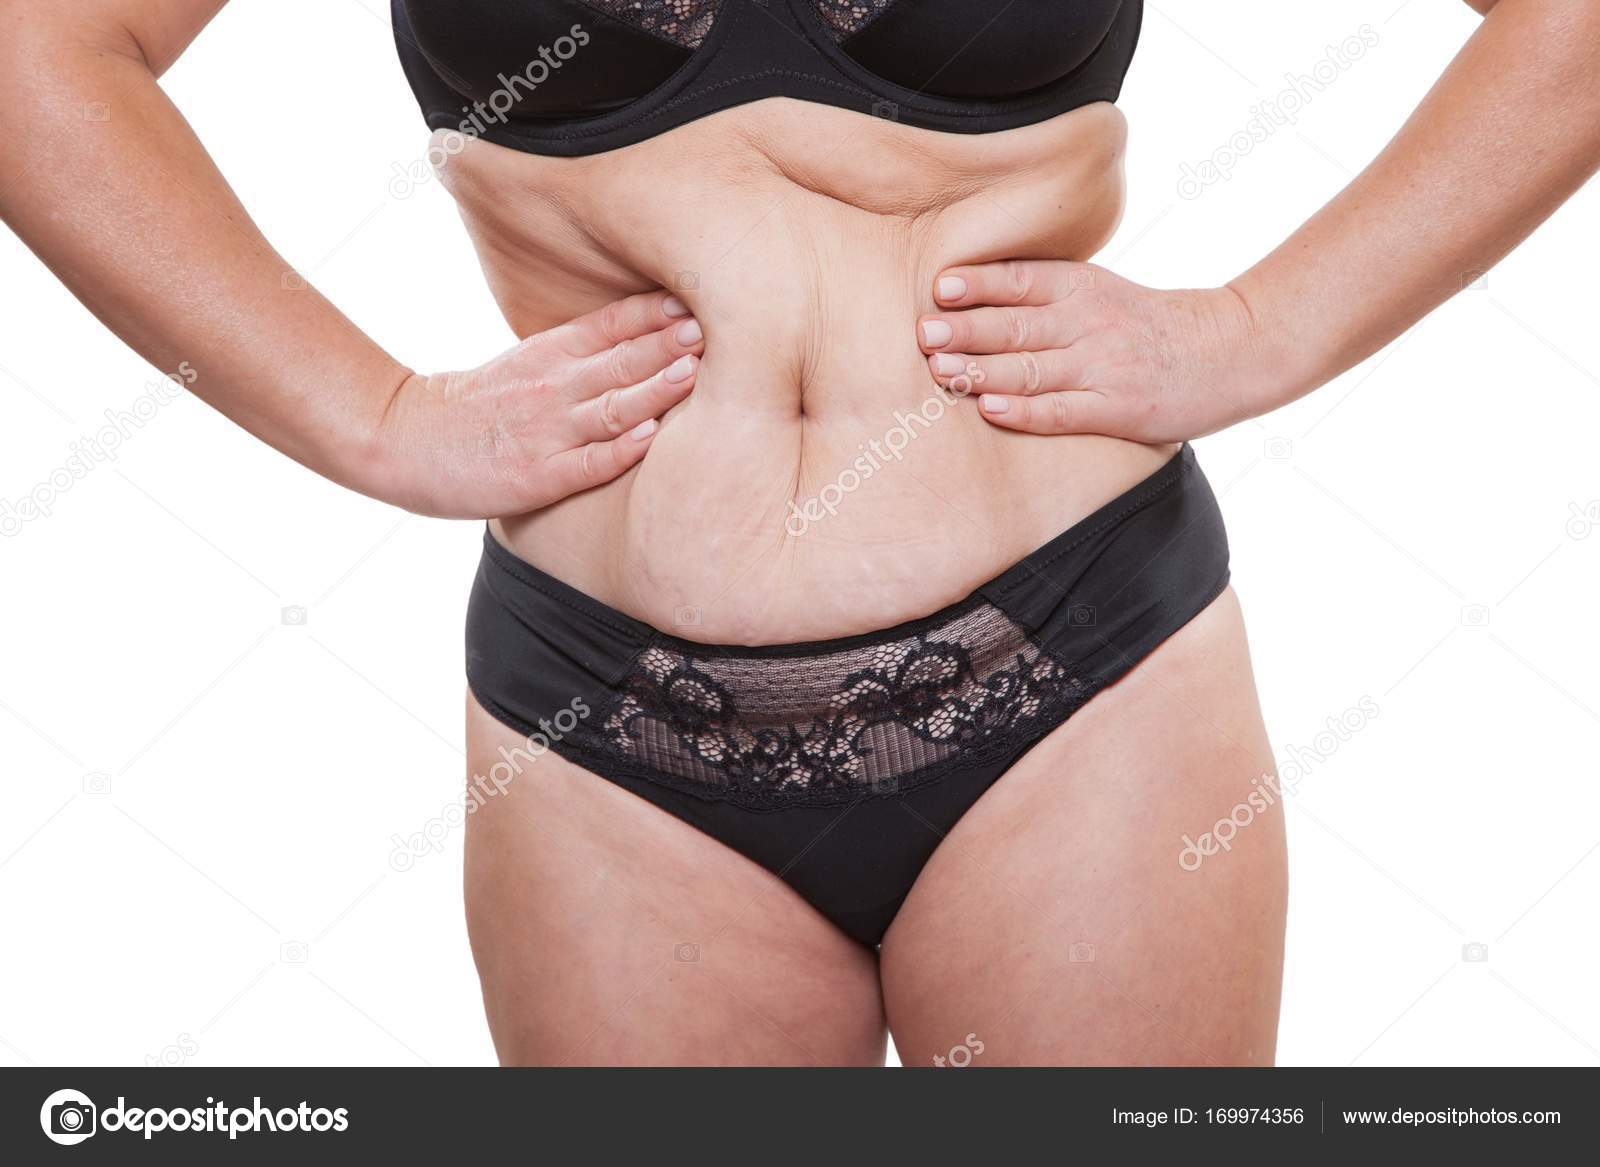 https://st3.depositphotos.com/7317858/16997/i/1600/depositphotos_169974356-stock-photo-woman-in-underwear-squeezing-belly.jpg